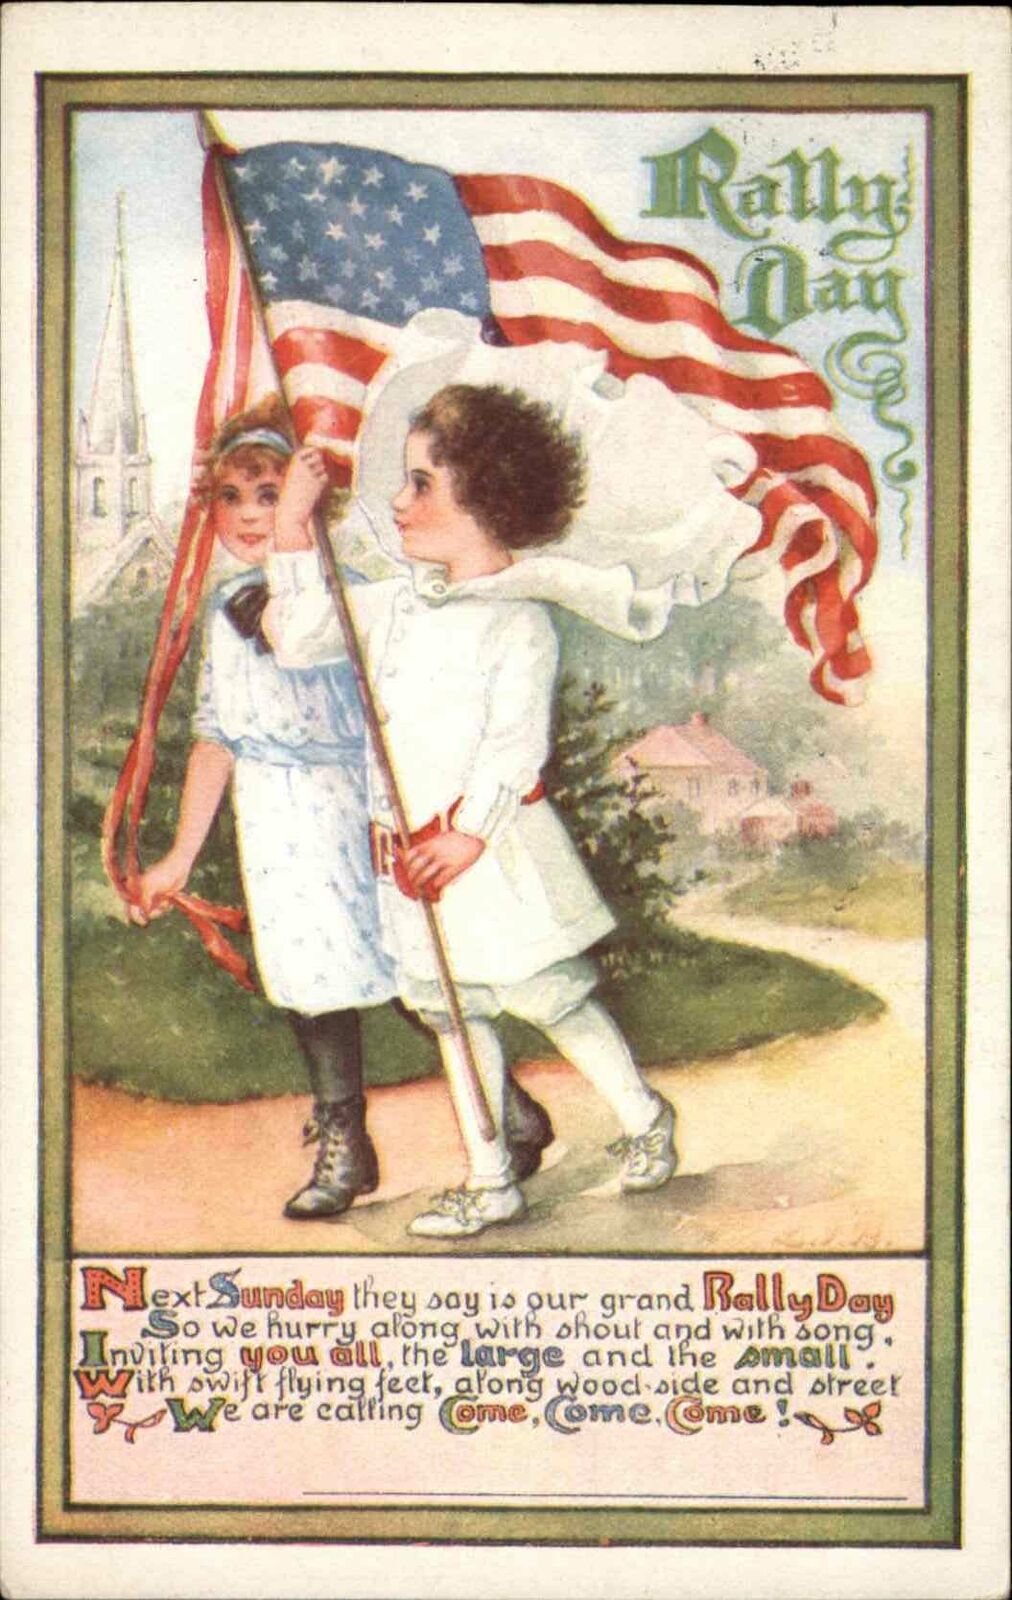 Rally Day Sunday School Kids W/ American Flags 1914 Used Postcard